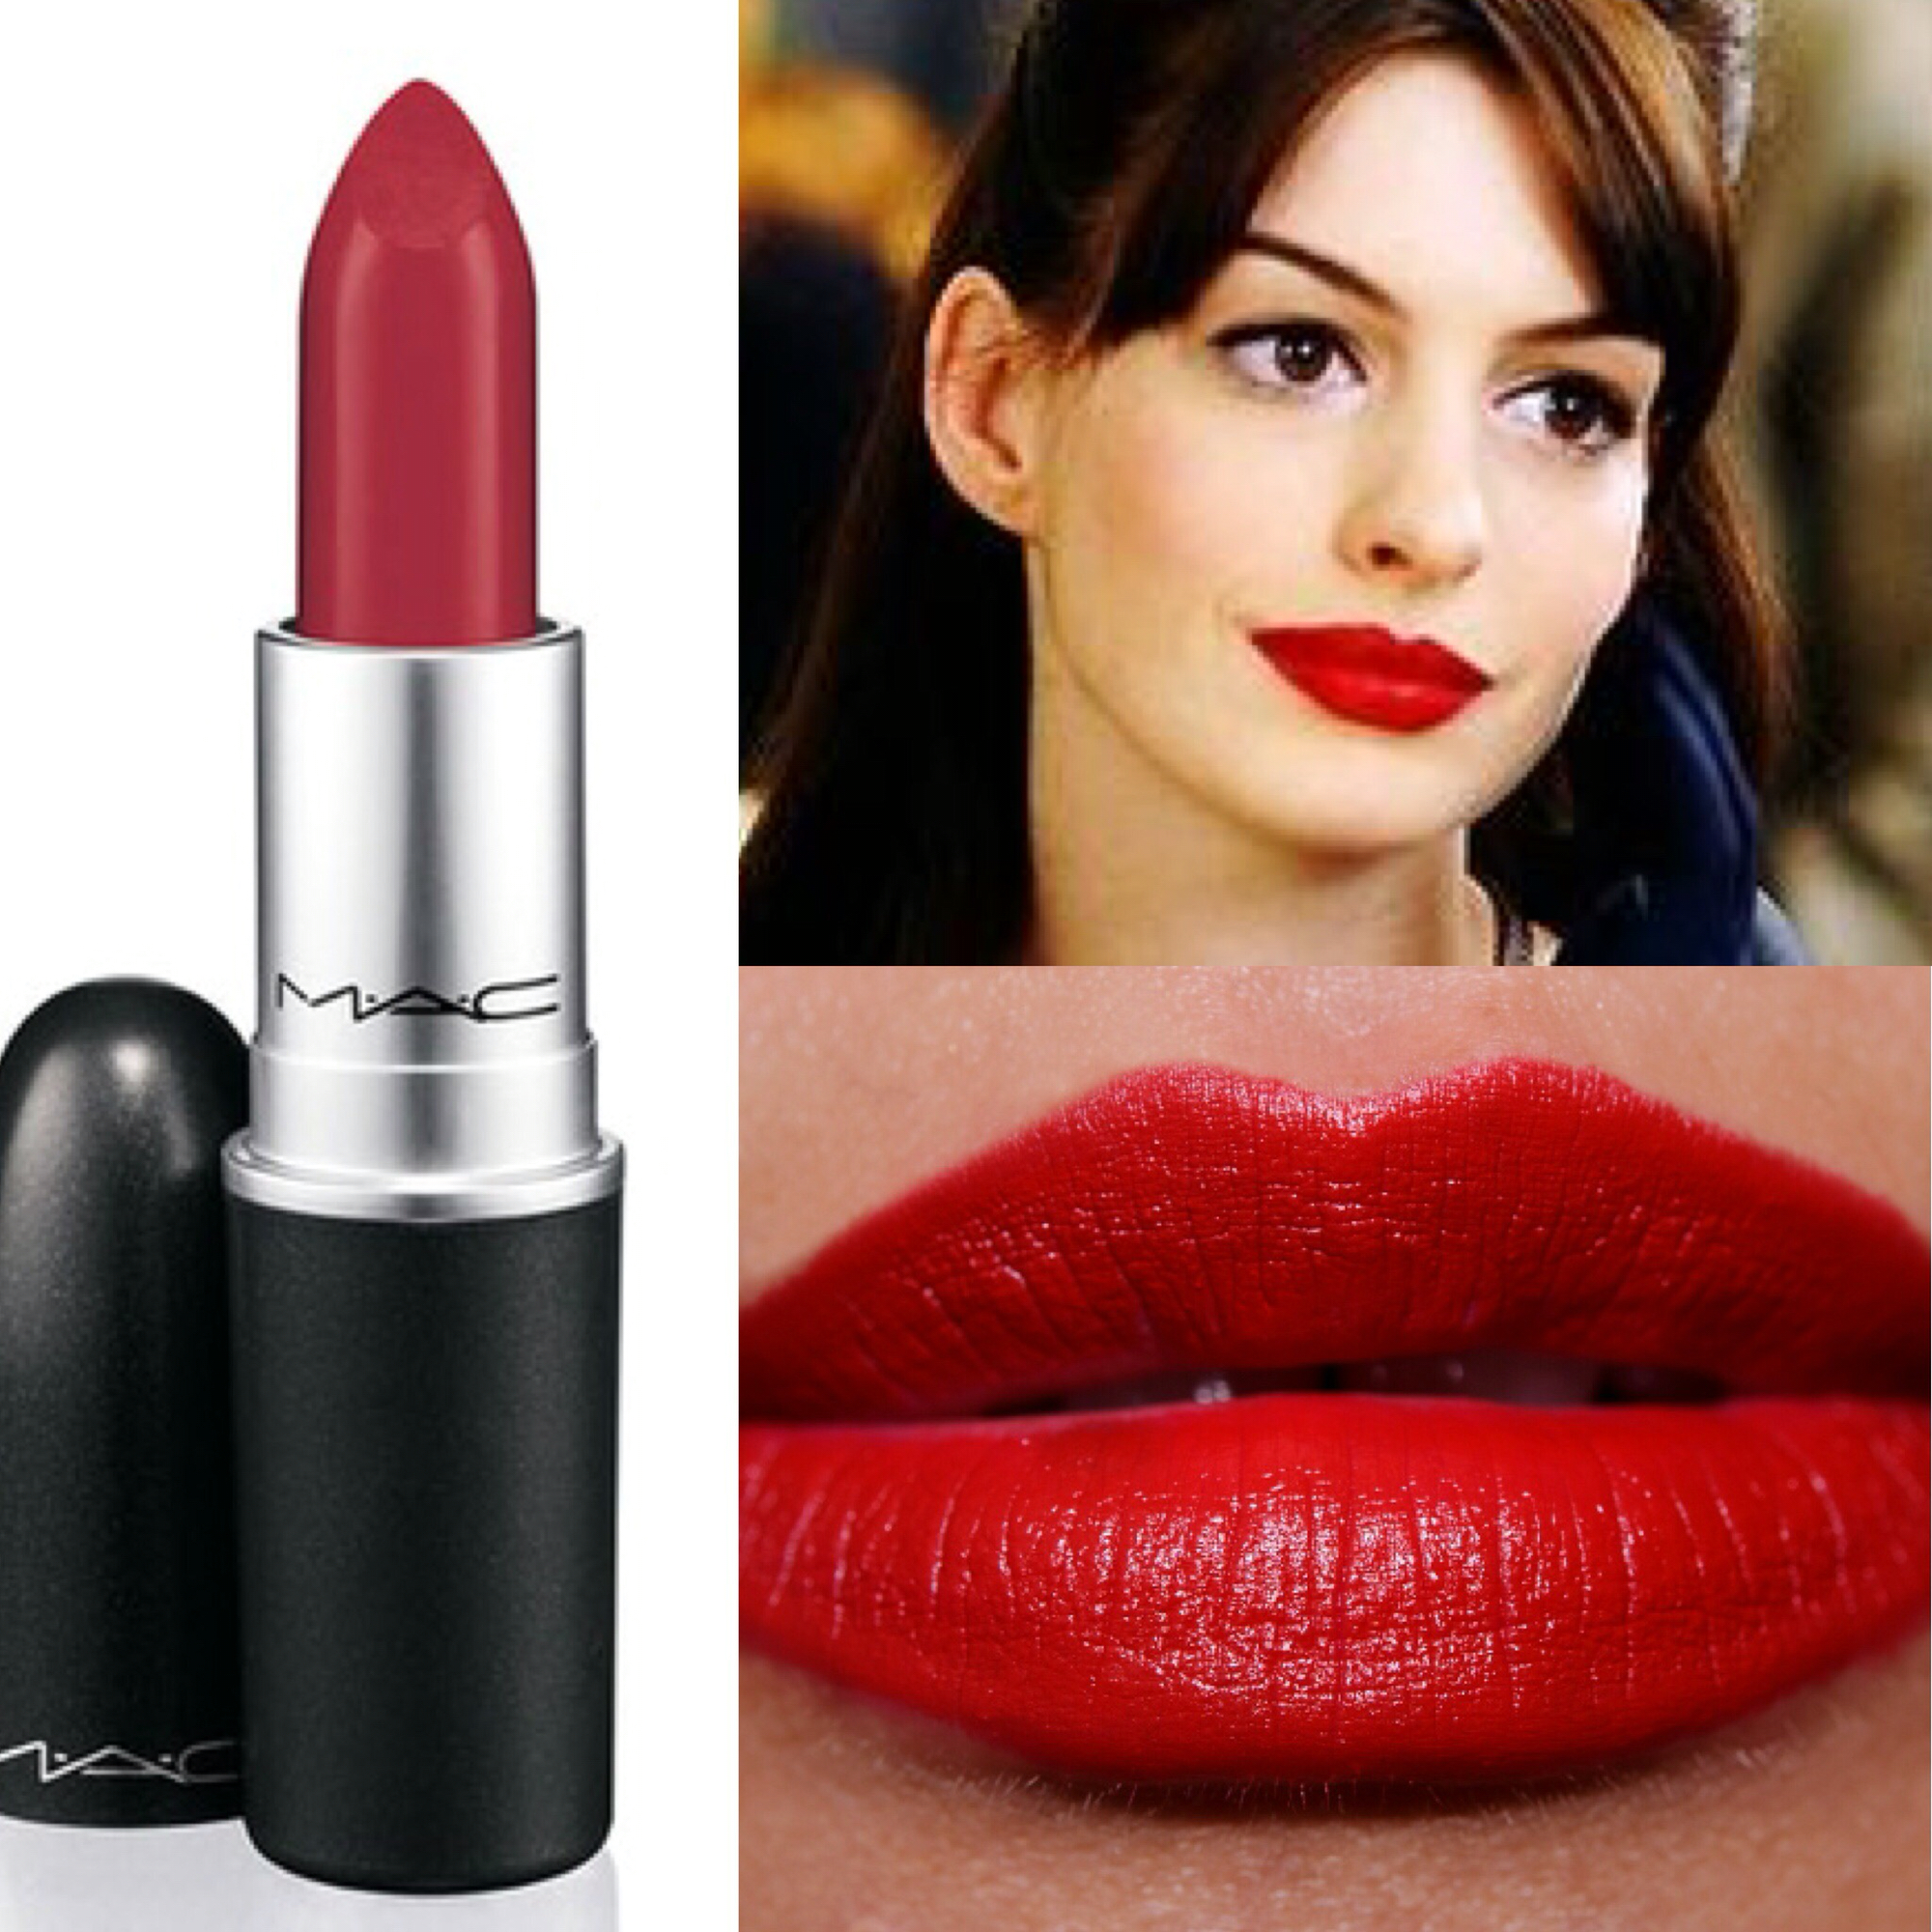 Russian Red - MAC | Makeup! | Pinterest | Russian red, Macs and Makeup